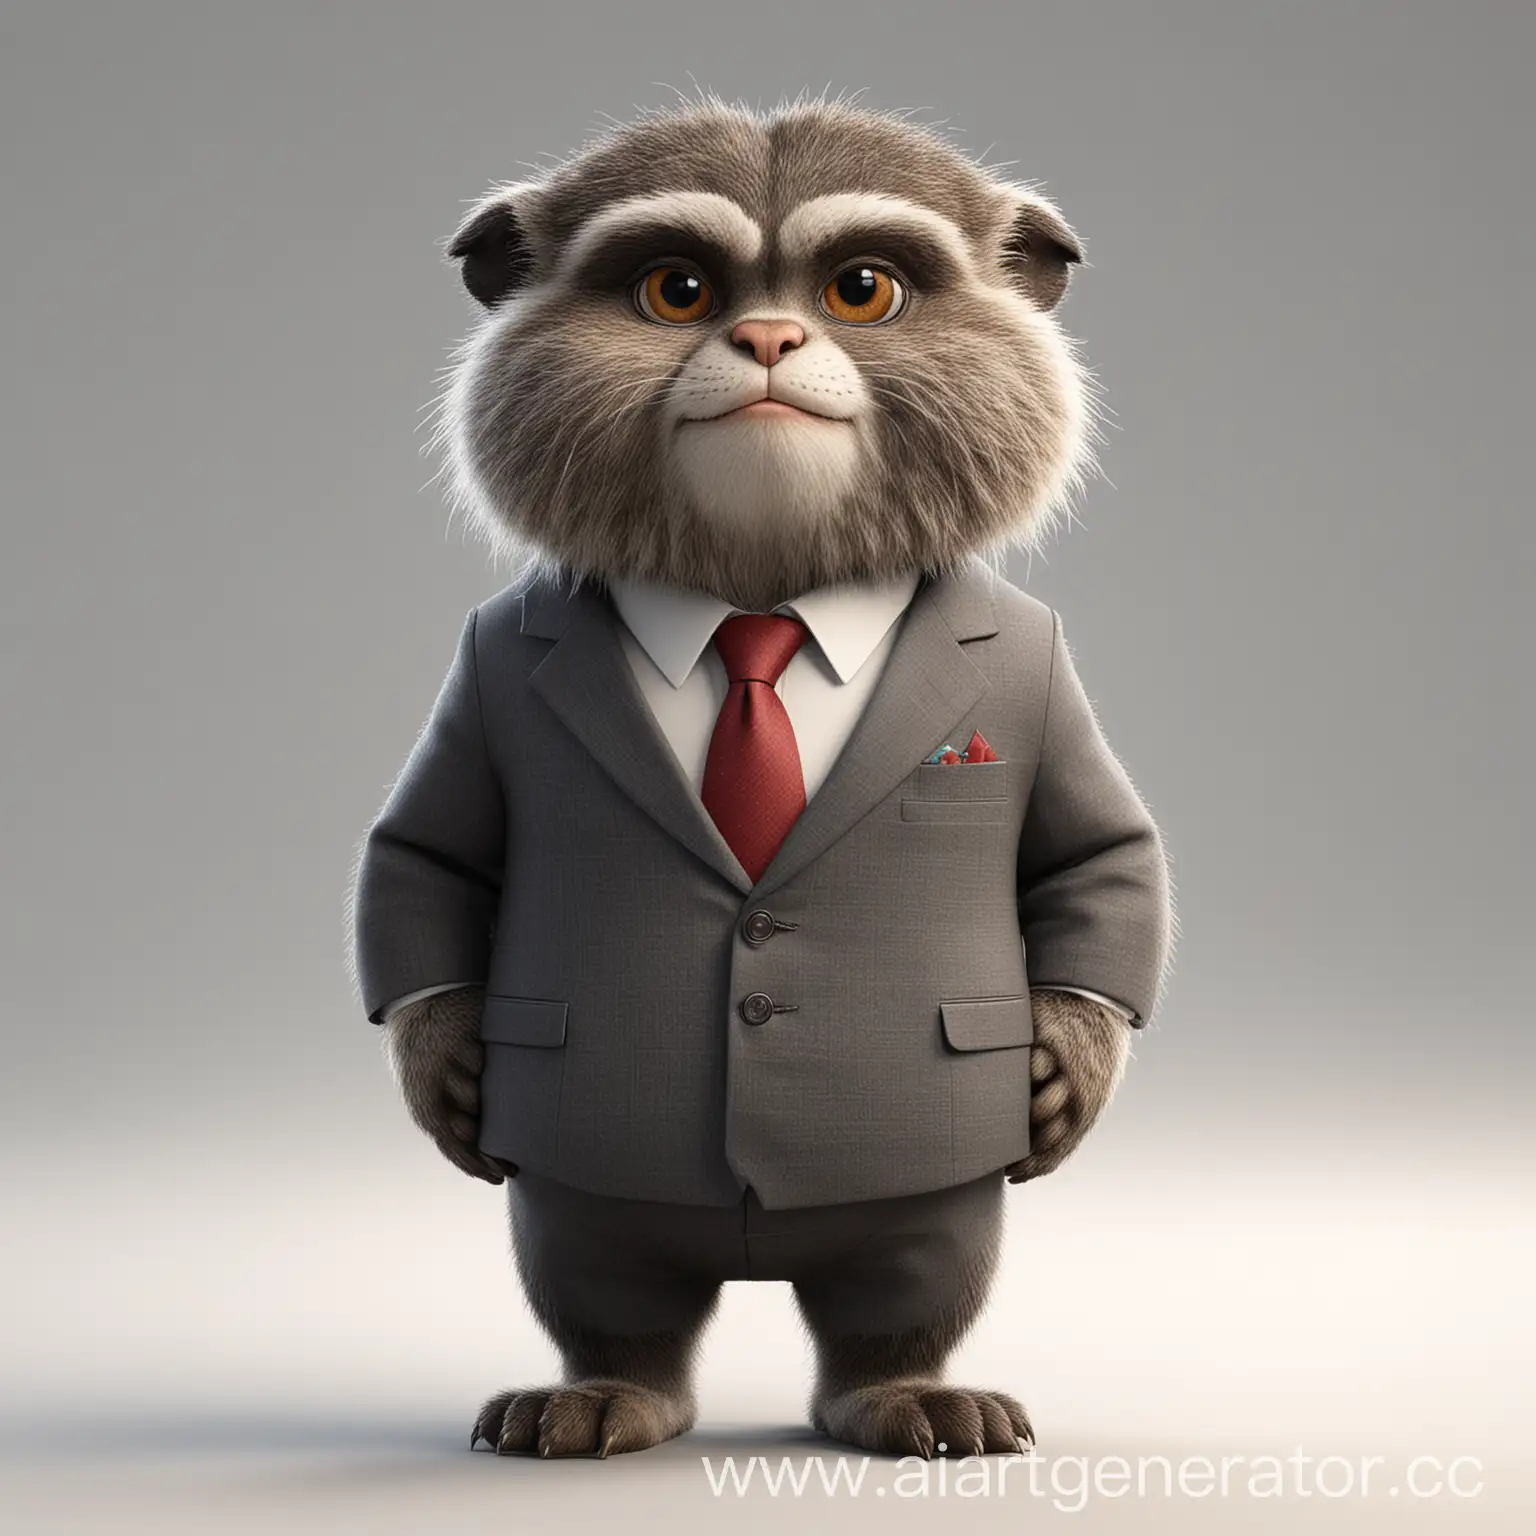 Businessman-Manul-3D-Character-Illustration-on-White-Background